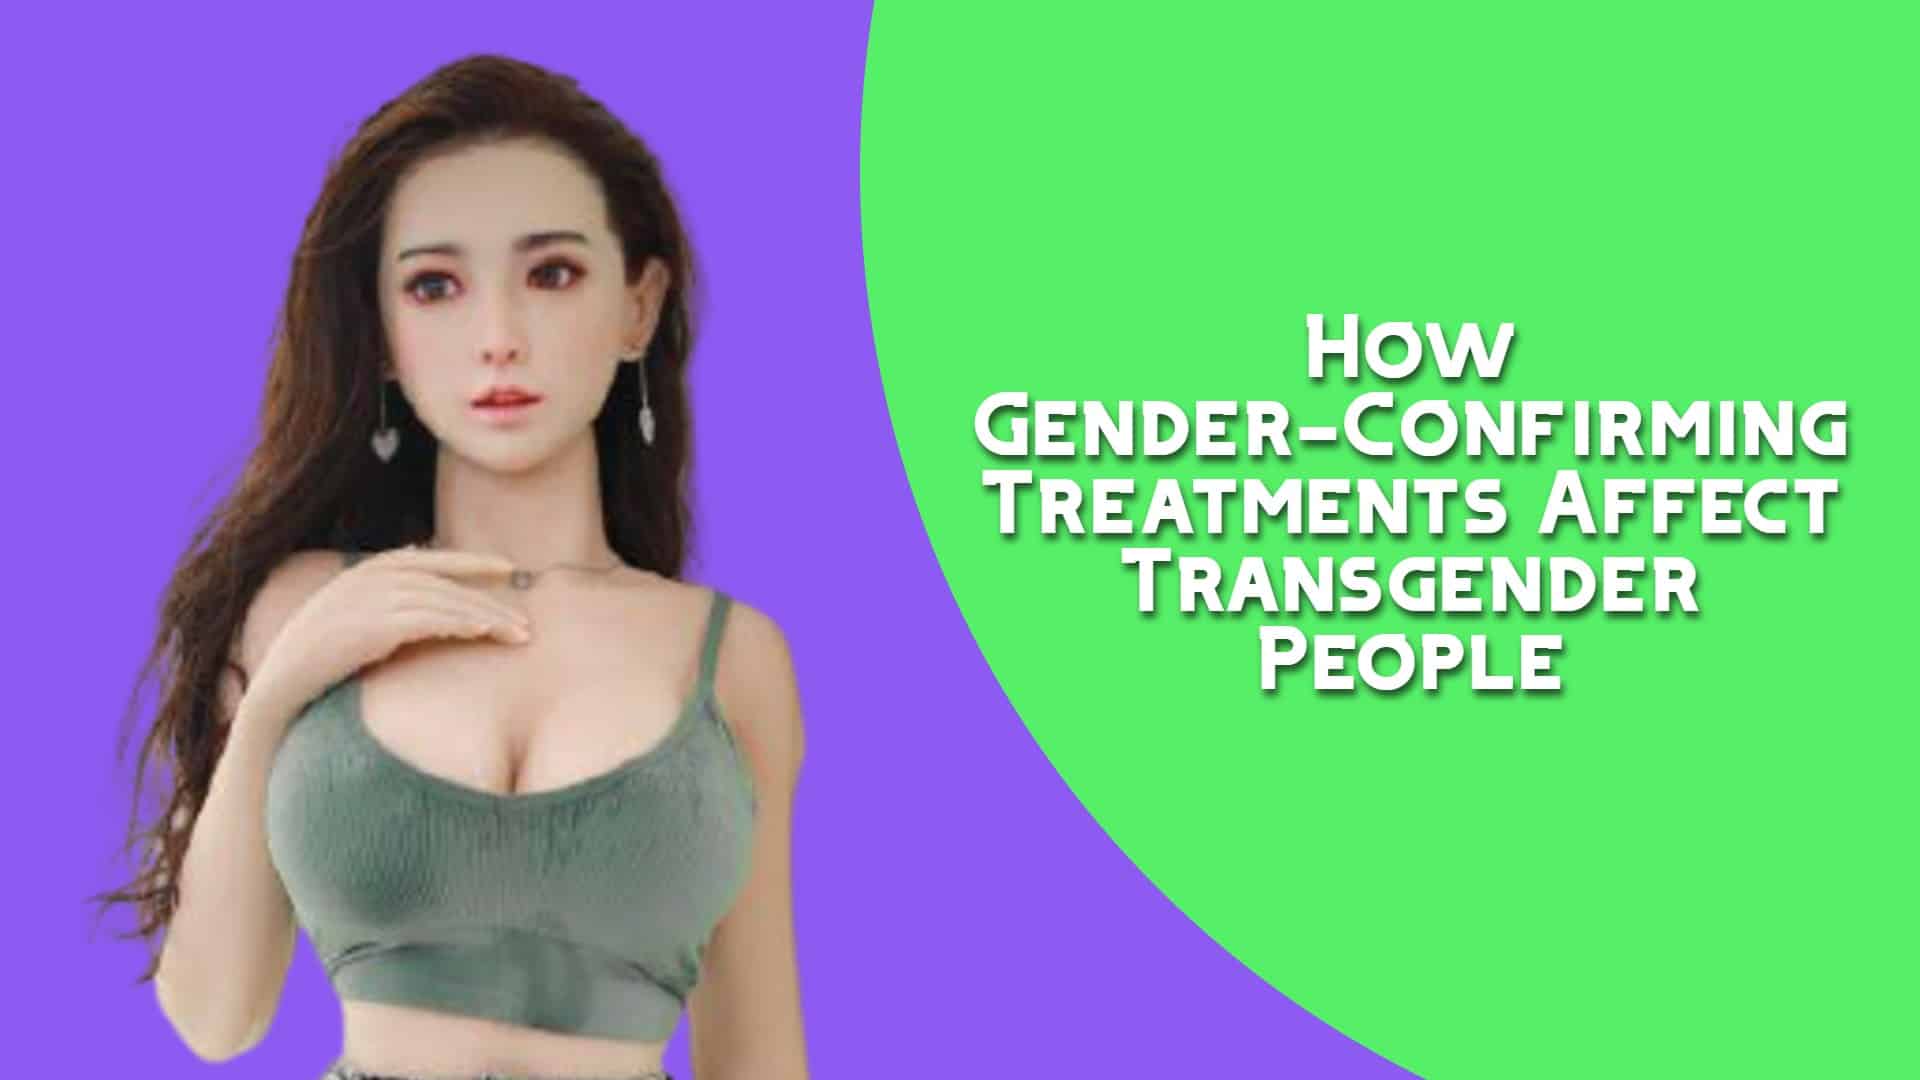 How Gender-Confirming Treatments Affect Transgender People